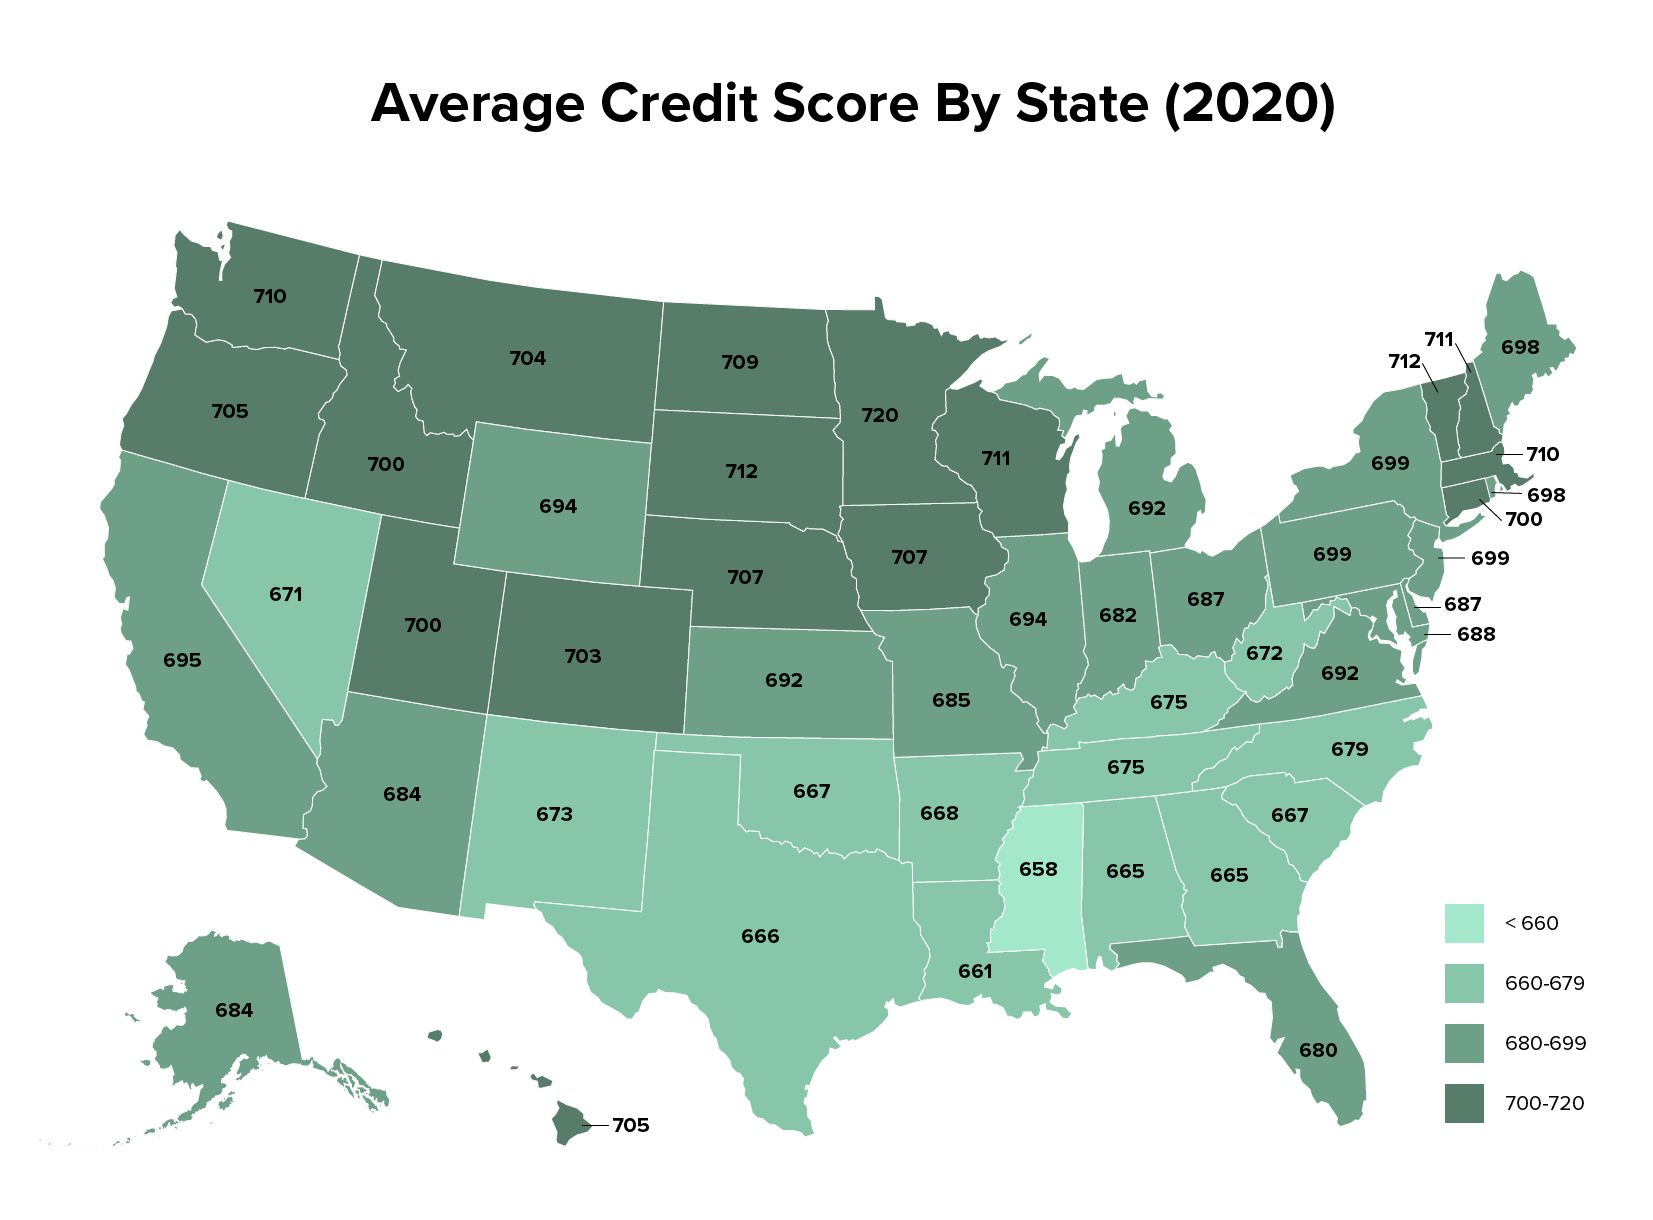 us credit score range